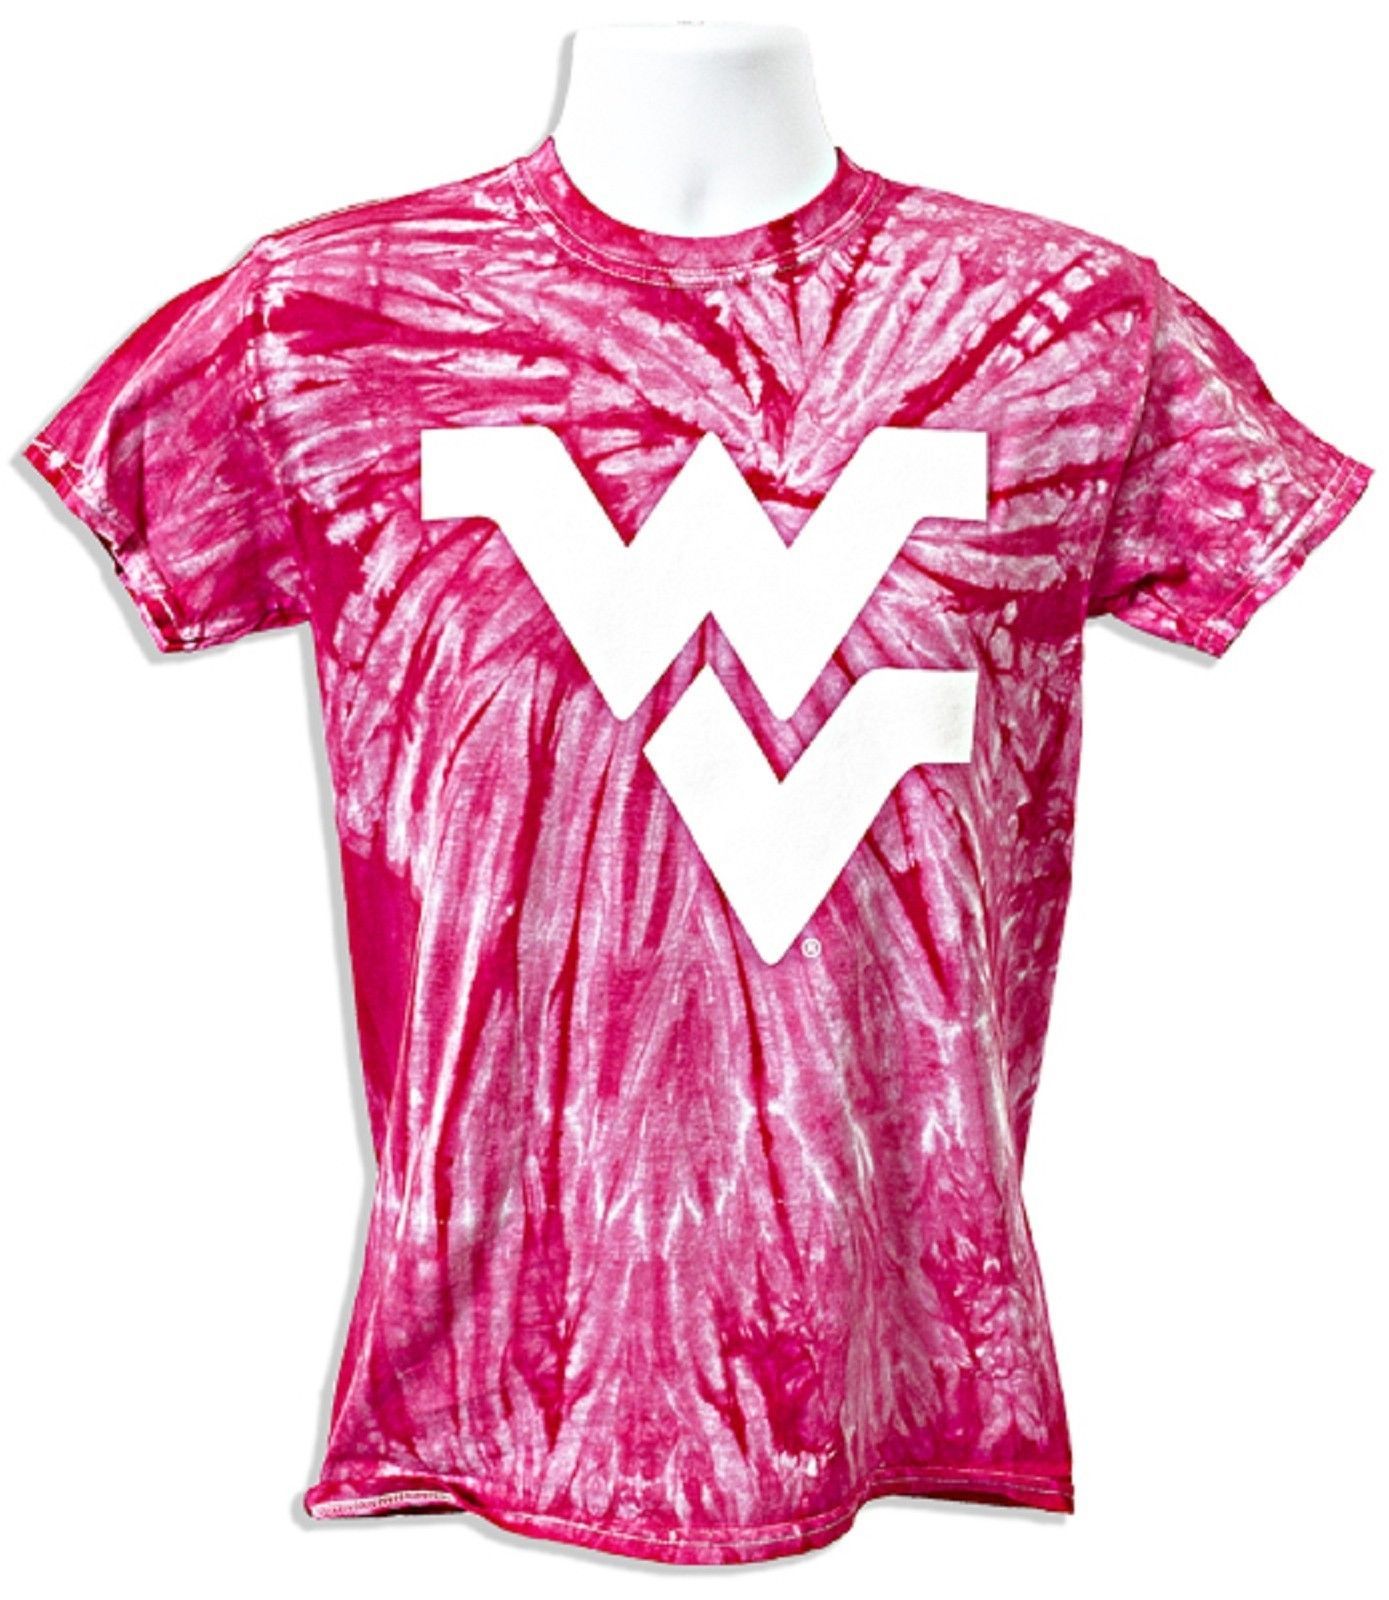 West Virginia Mountaineer's Logo Hot Pink Swirl T-Shirt - $15.19